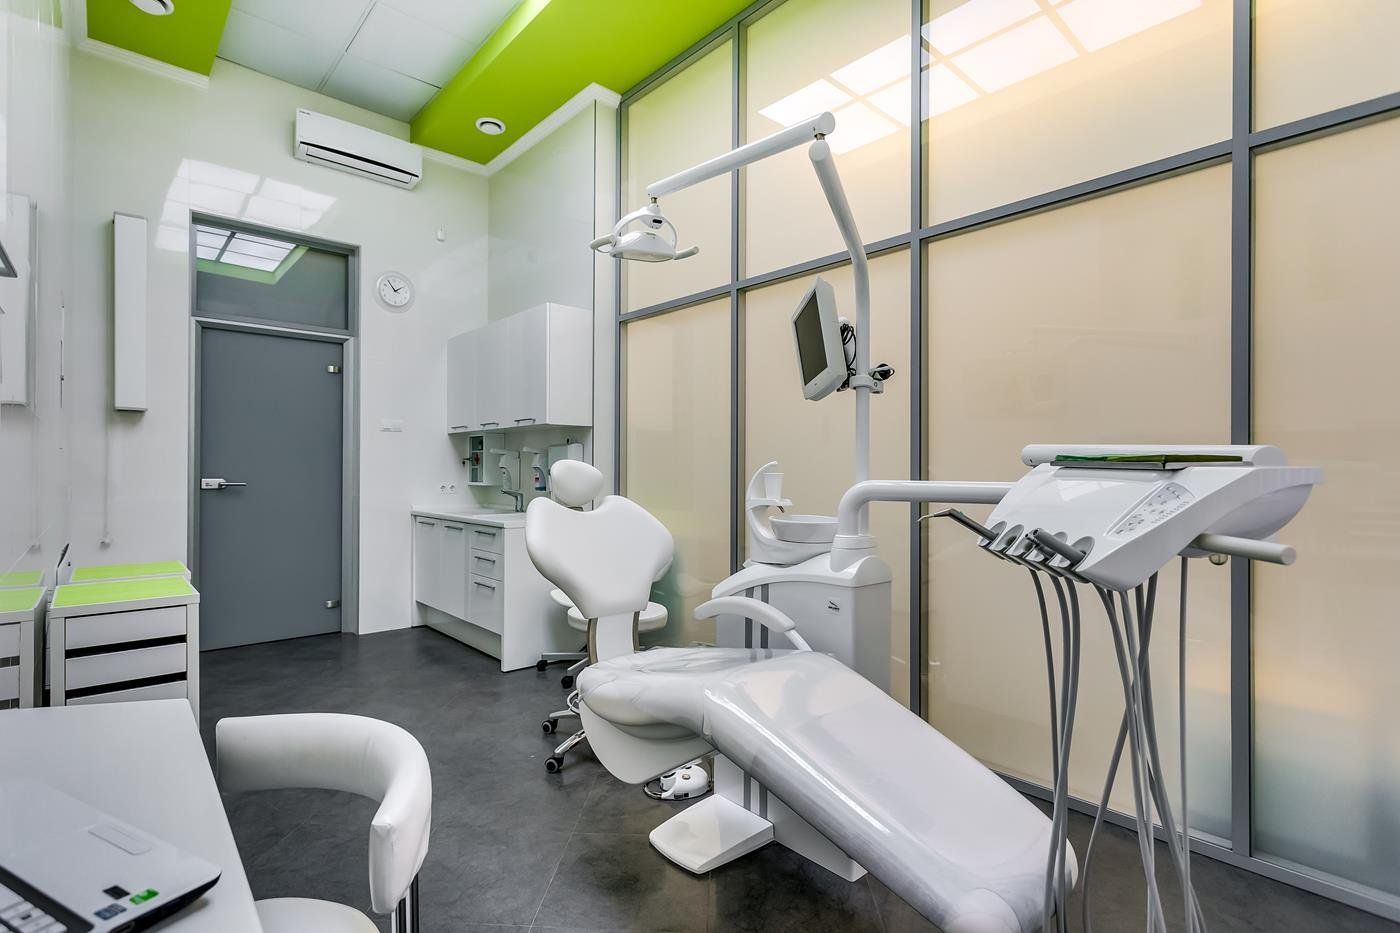 The best paid dental clinics for children in Nizhny Novgorod in 2020